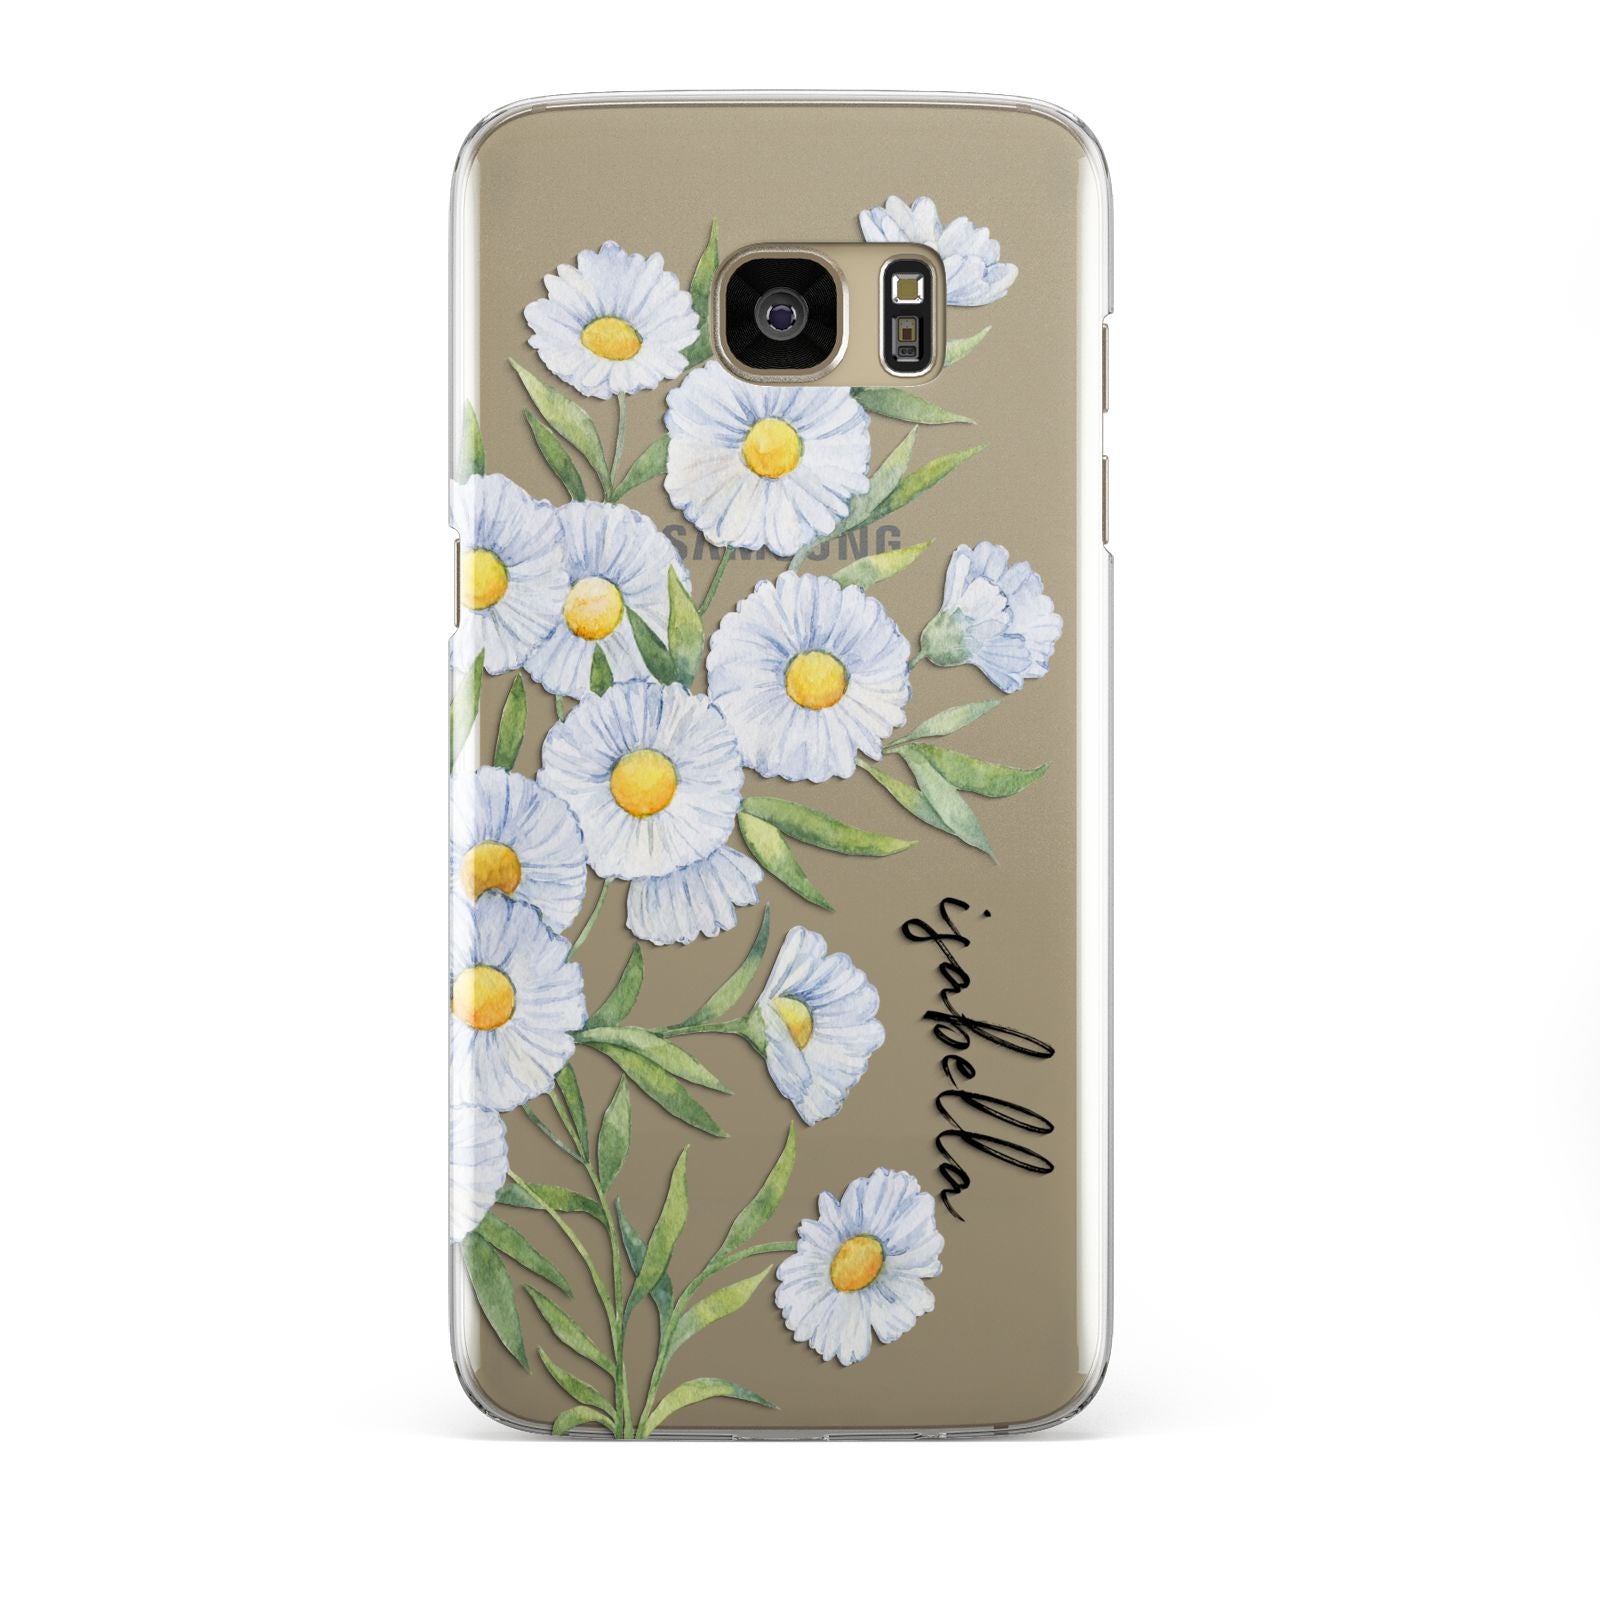 Personalised Daisy Flower Samsung Galaxy S7 Edge Case